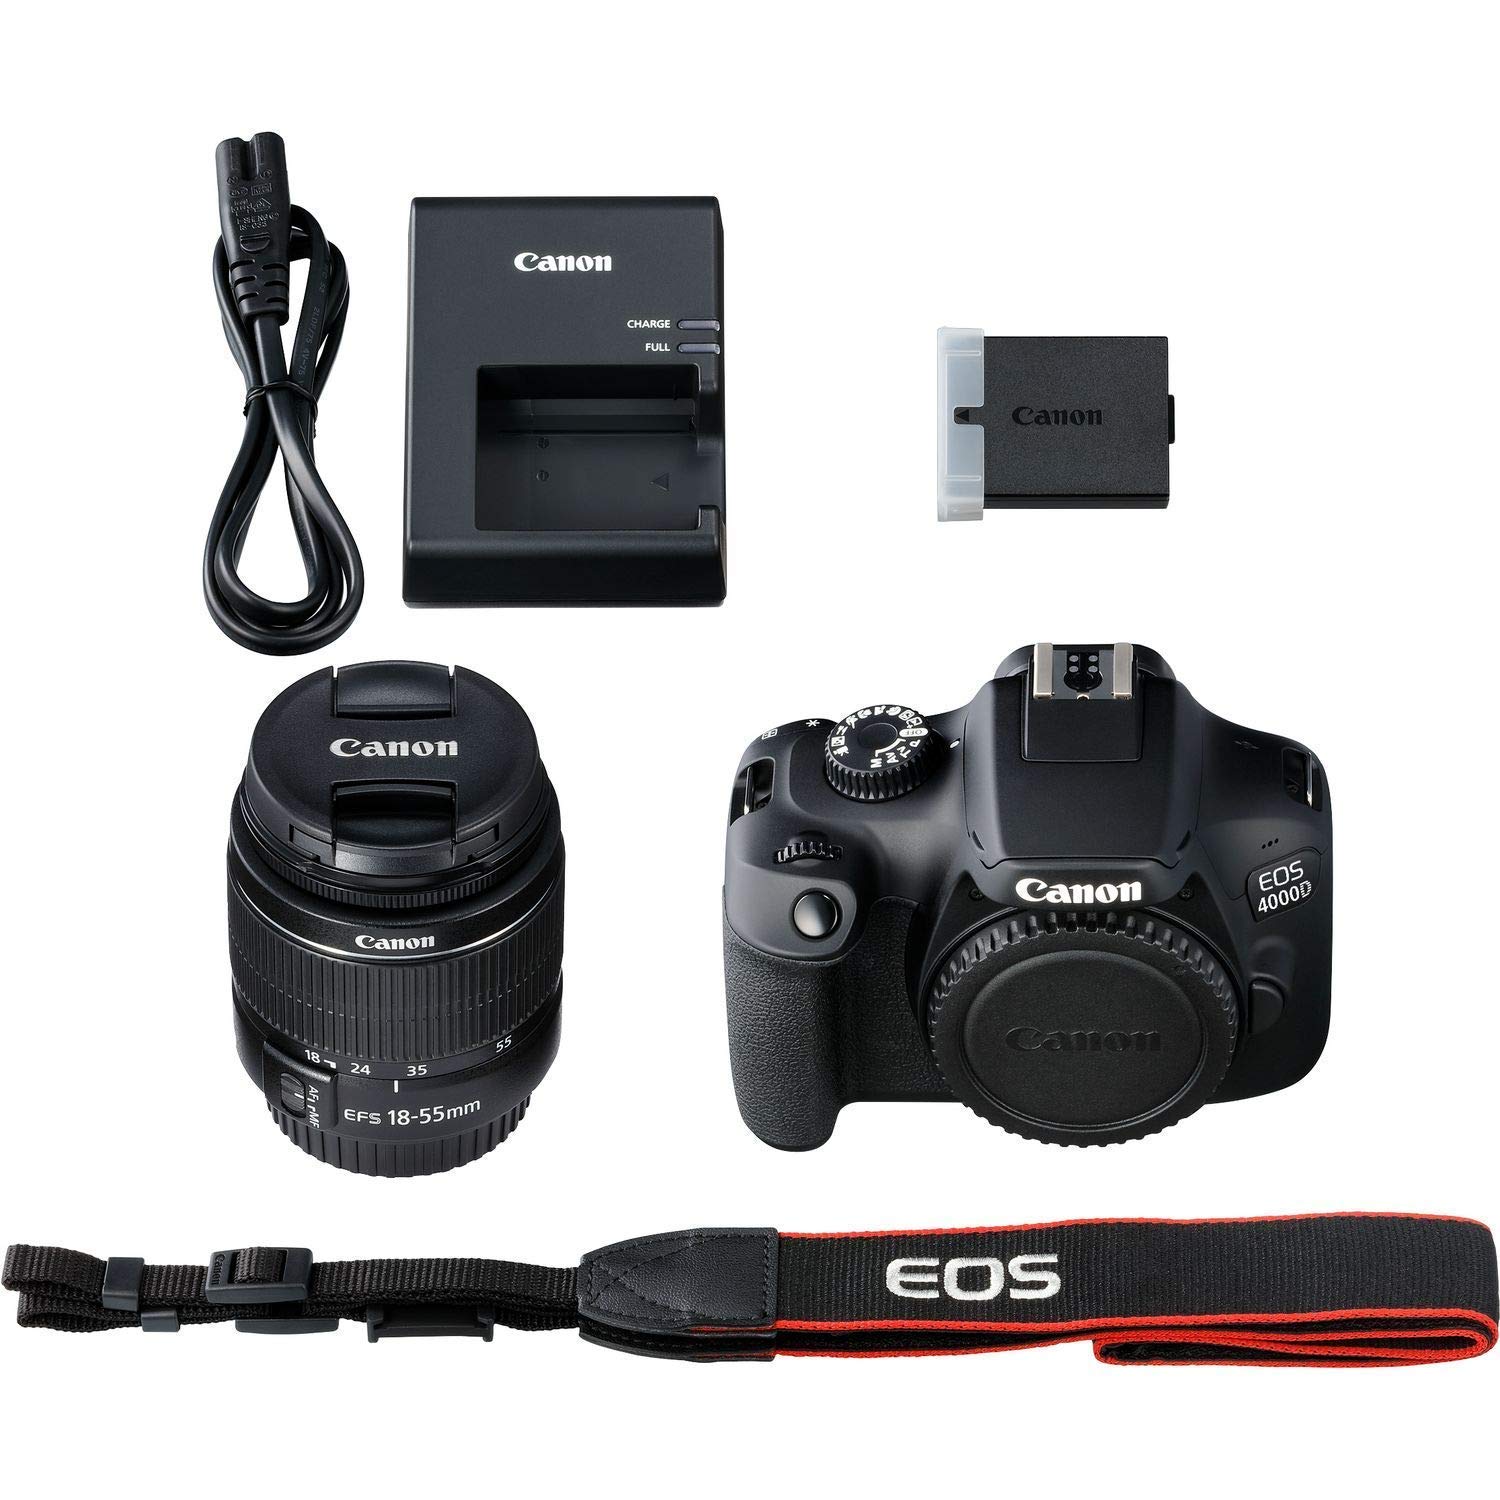 EOS 4000D DSLR Camera with 18-55mm f/3.5-5.6 III Lens - Pixi Advanced Bundle (International Version) (Renewed)